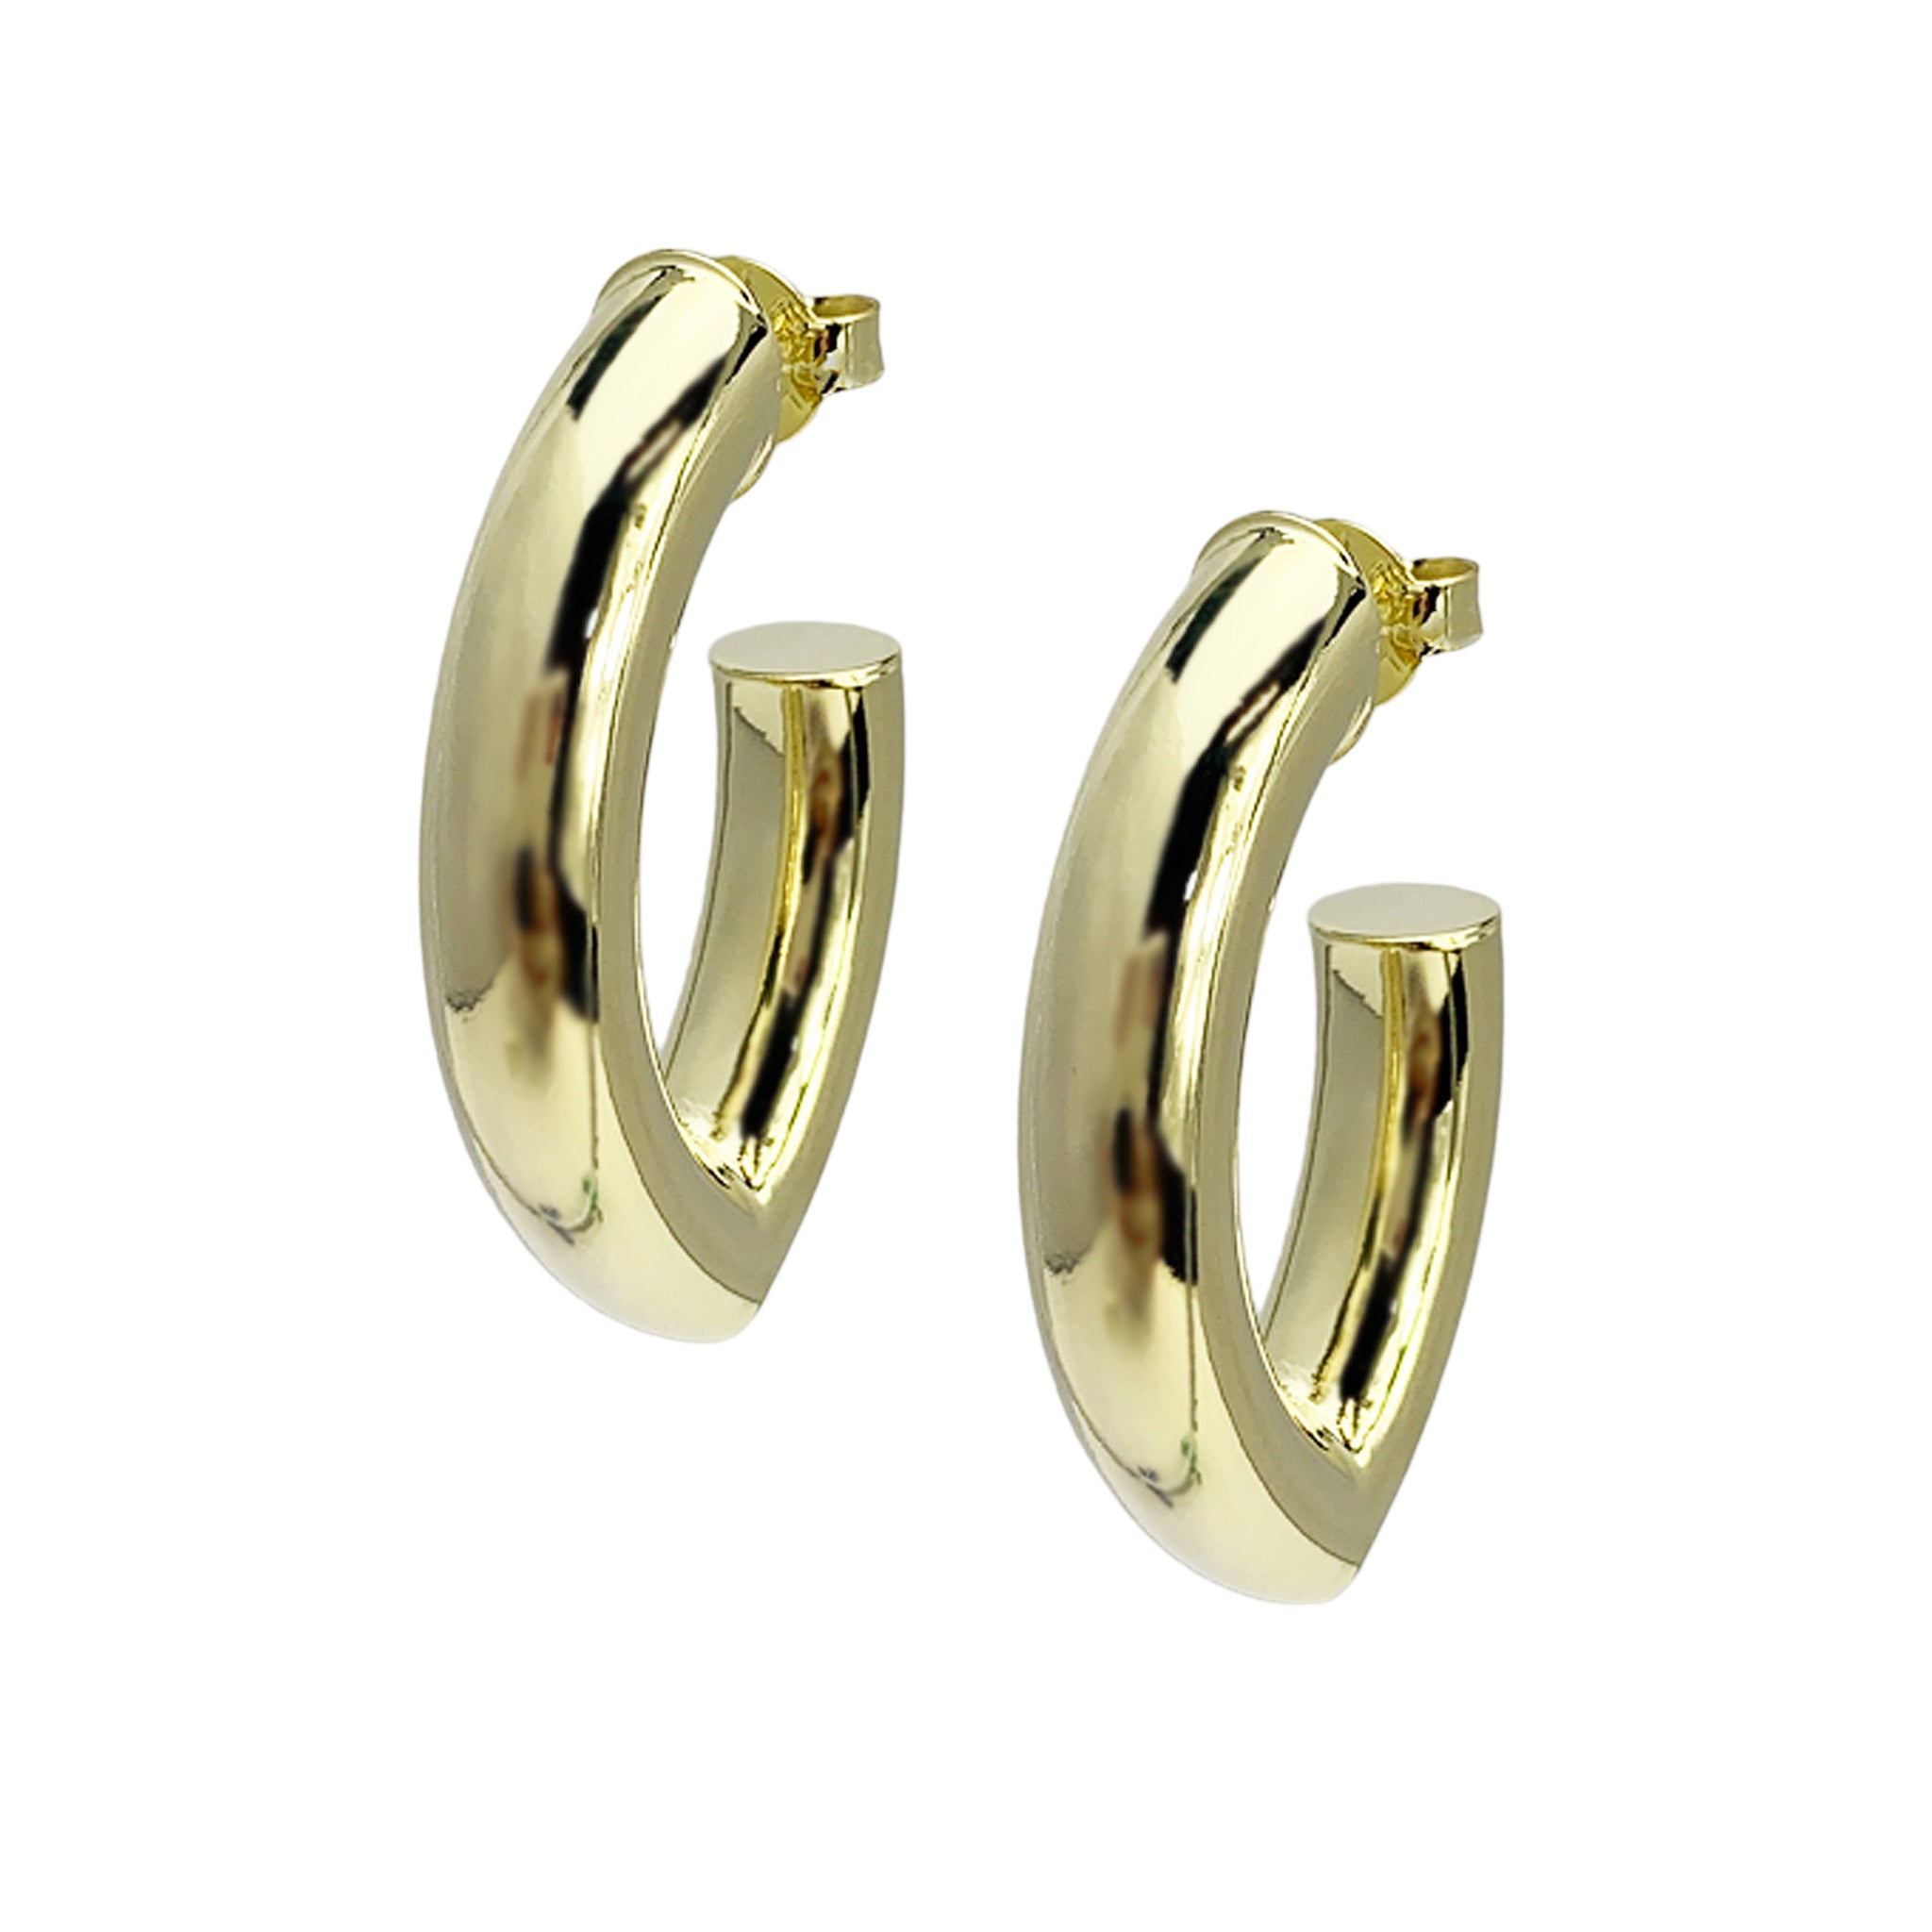 Sheila Fajl Stare Hoop Earrings in Polished Gold Plated